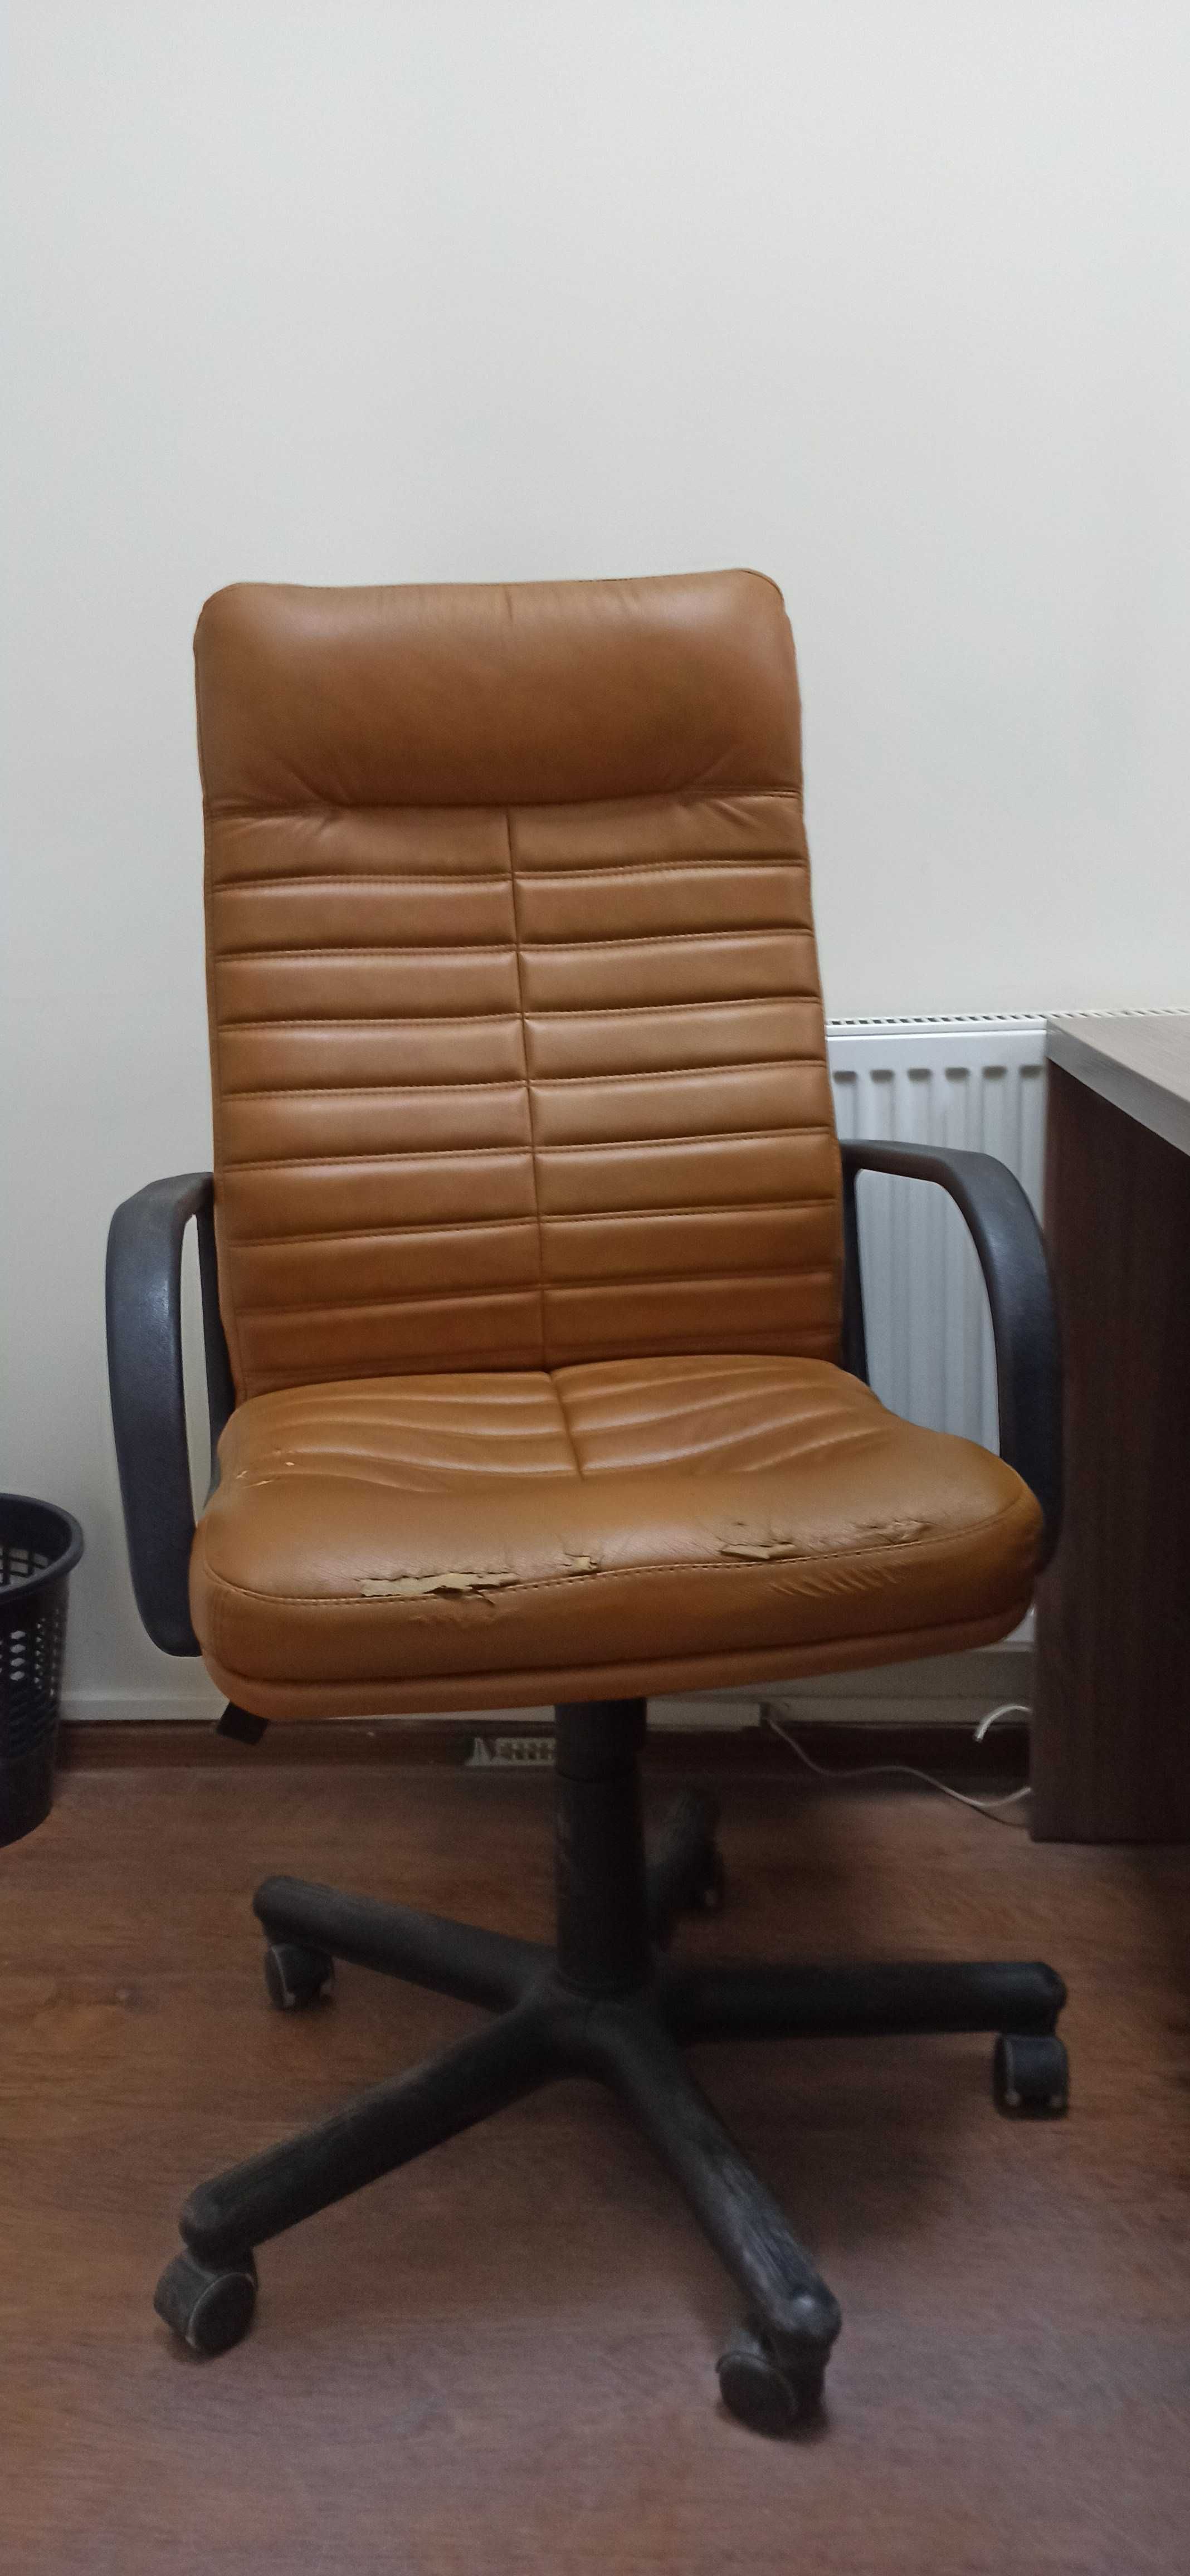 Крісло офісне, м'яке, коричневе